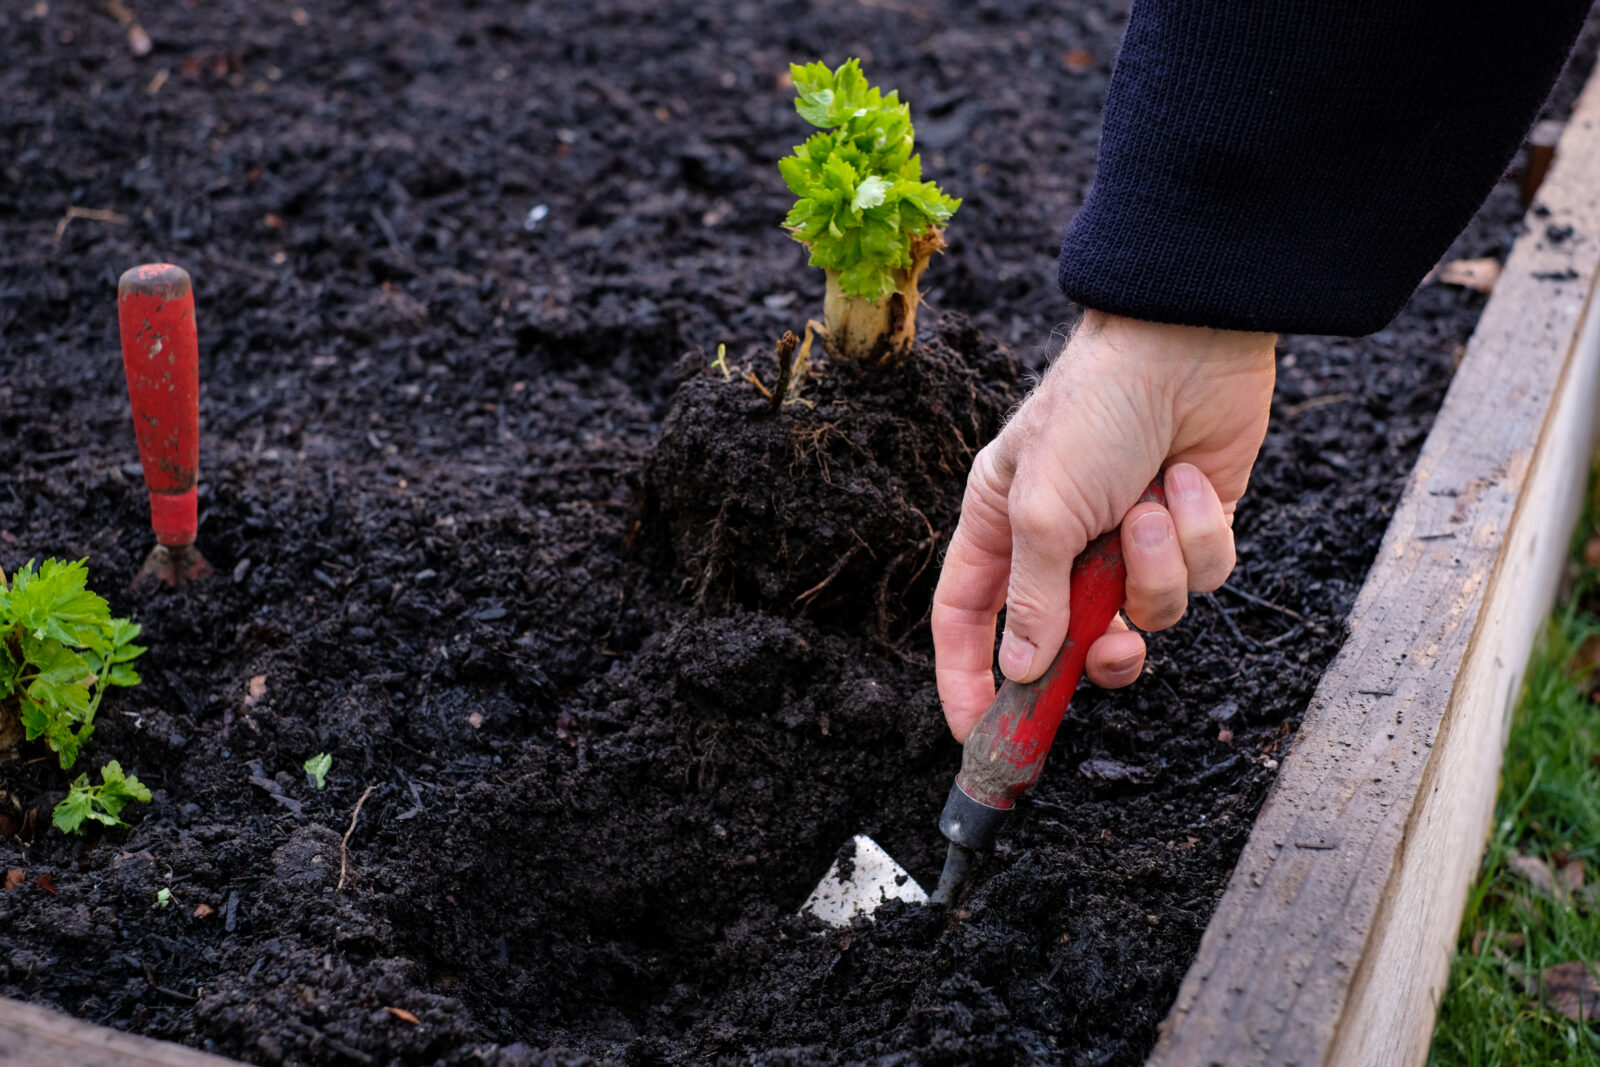 man digging in his vegetable garden to plant veget 2021 04 06 22 59 29 utc